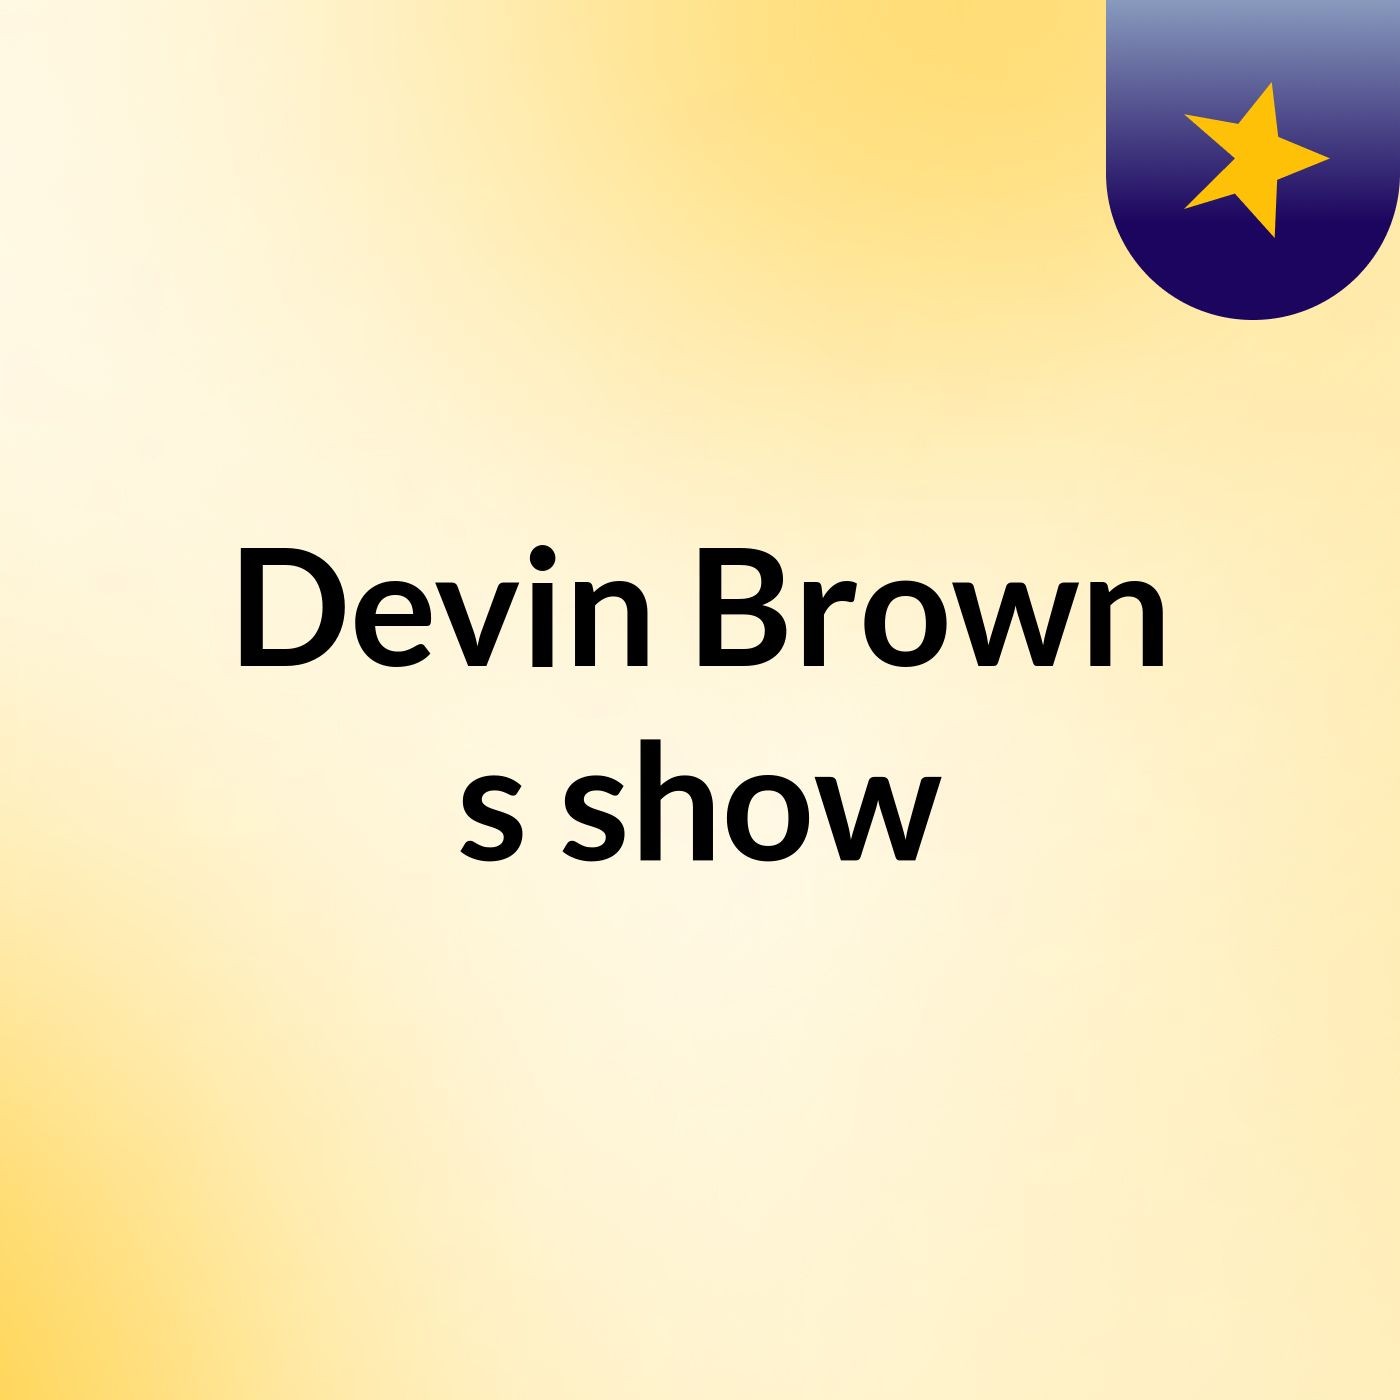 Devin Brown's show